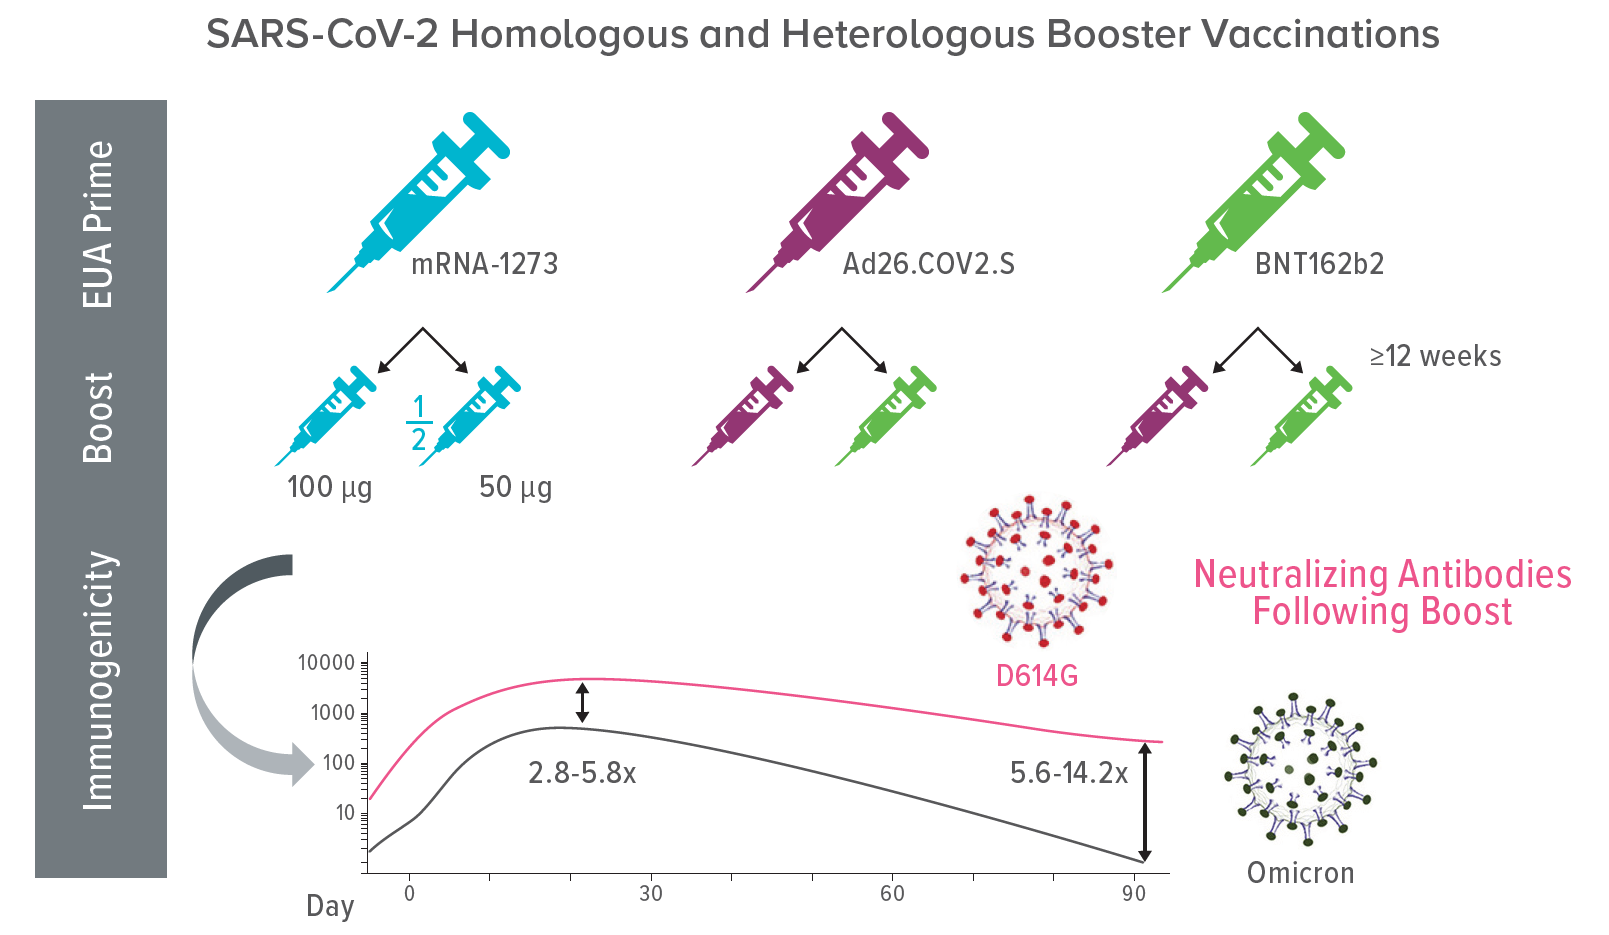 SARS-CoV-2 Homologous and Heterologous Booster Vaccinations